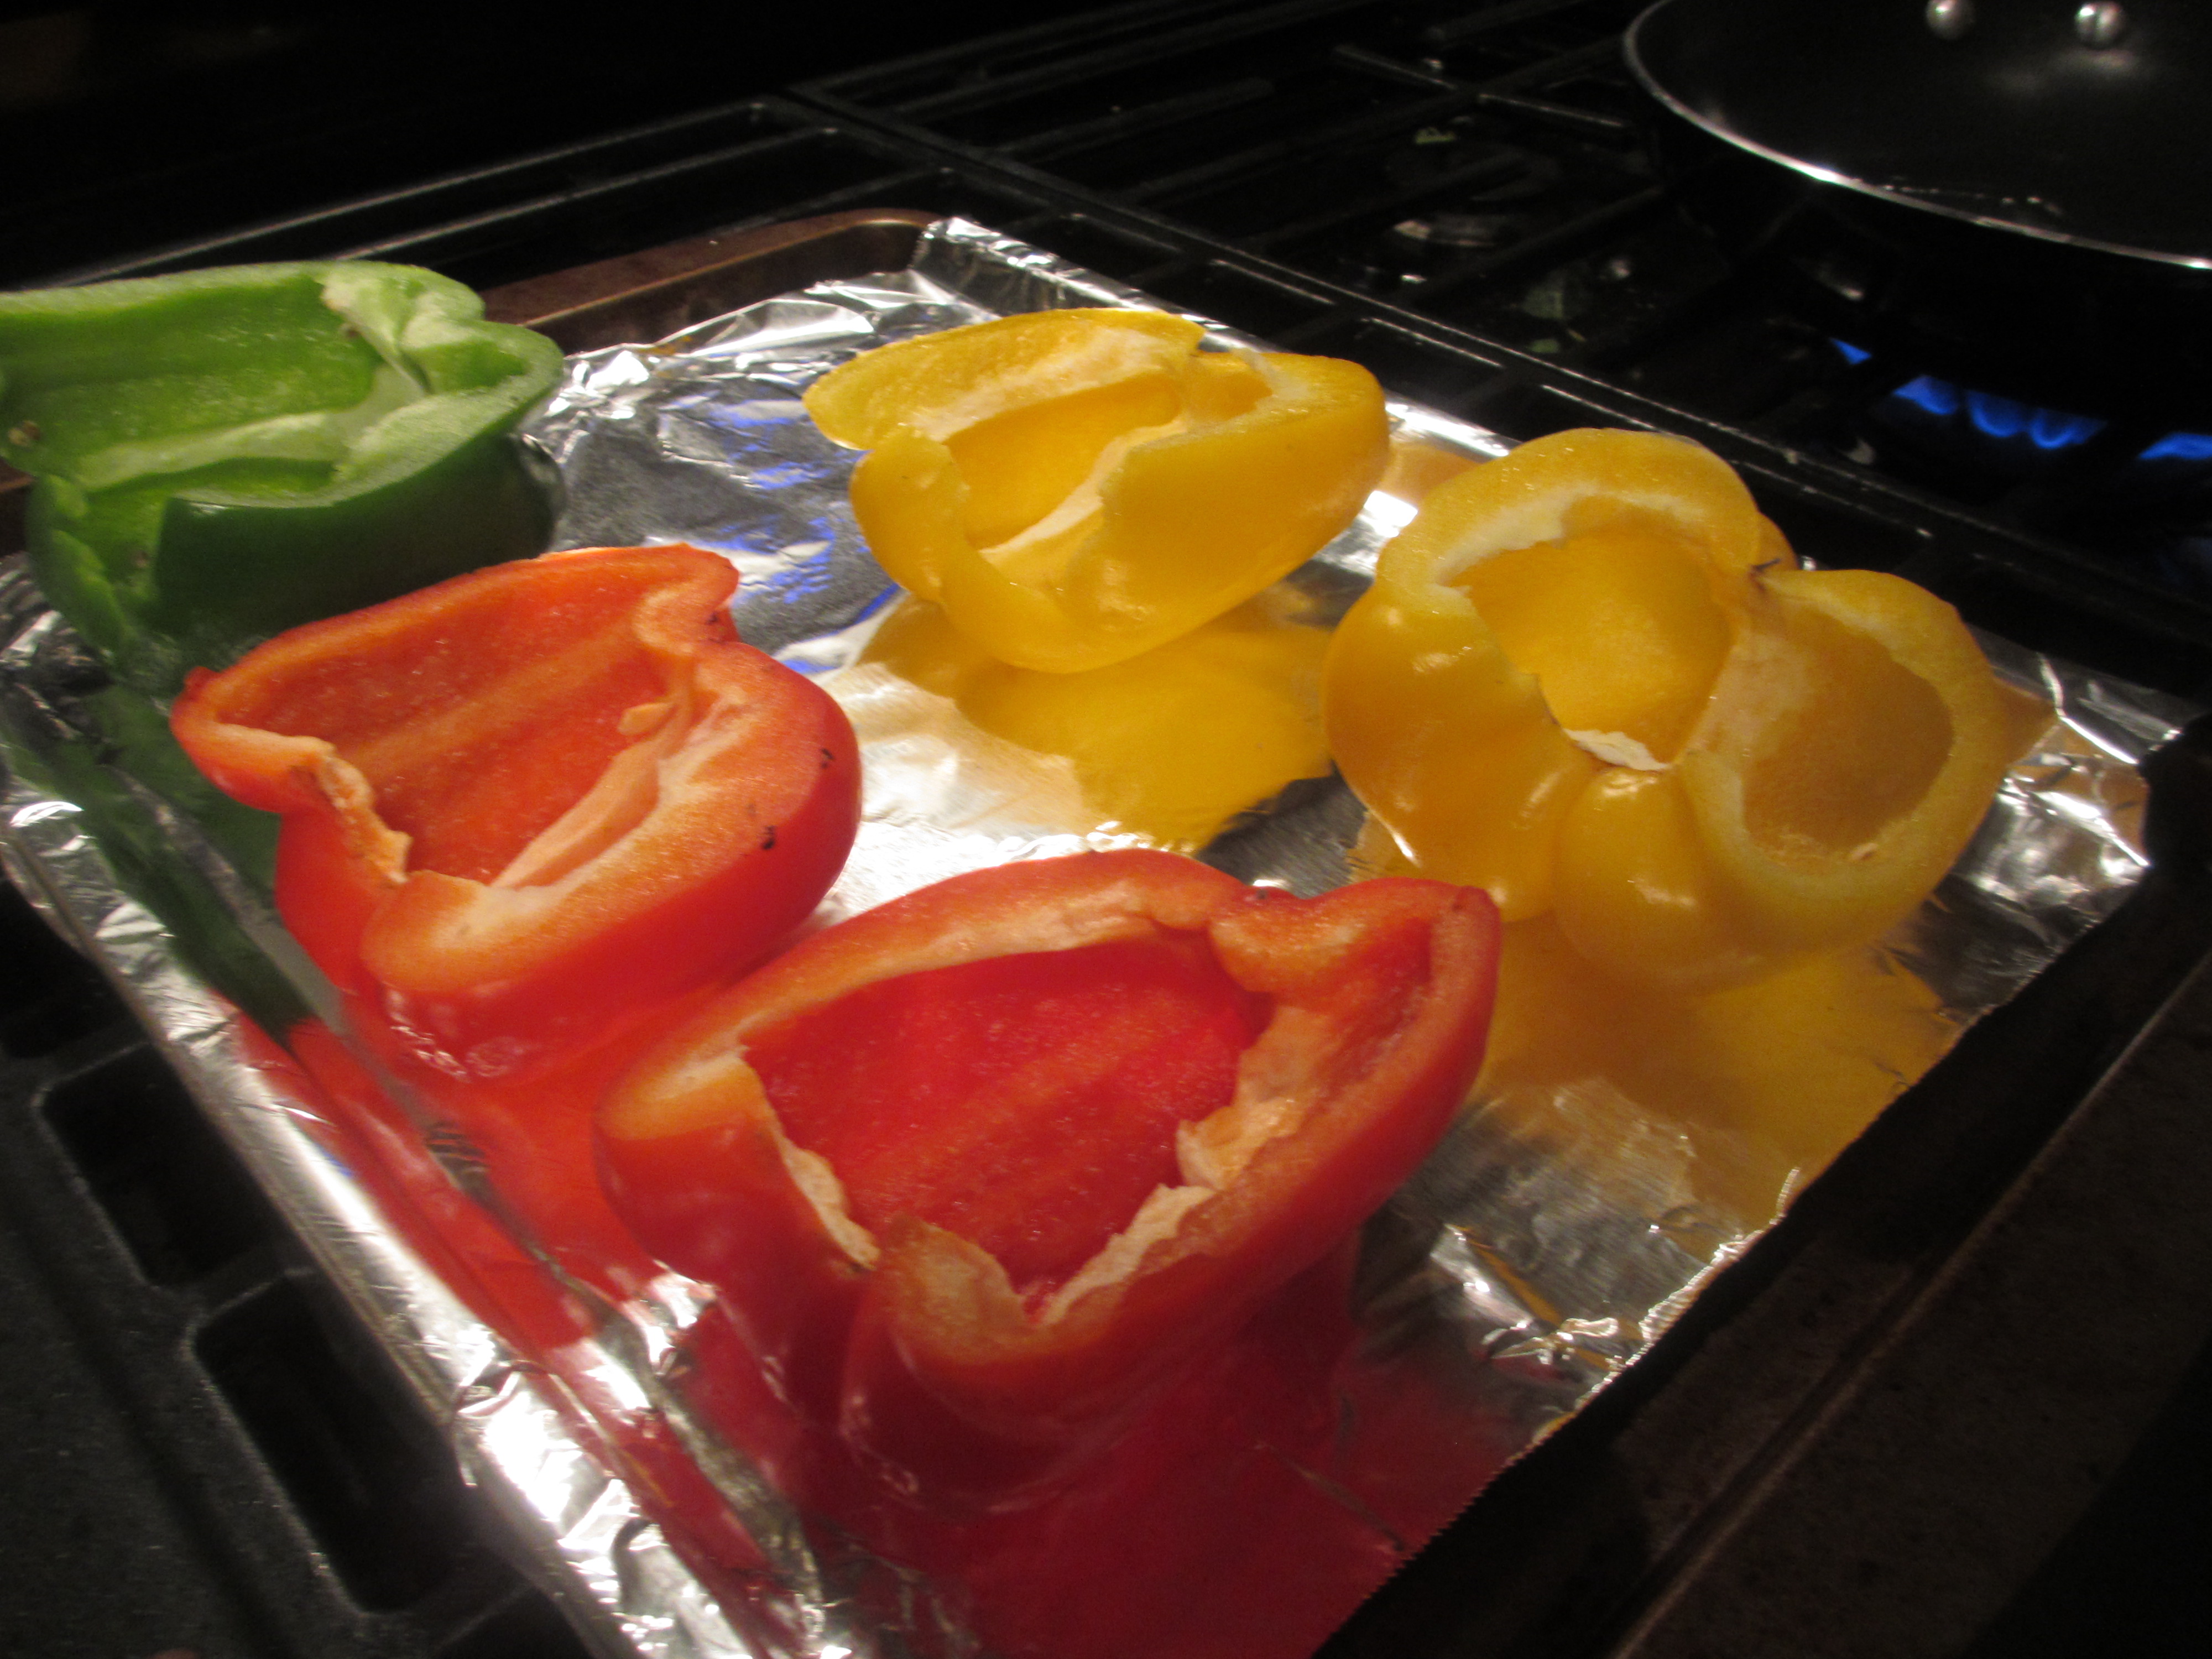 Bell peppers, cut in half